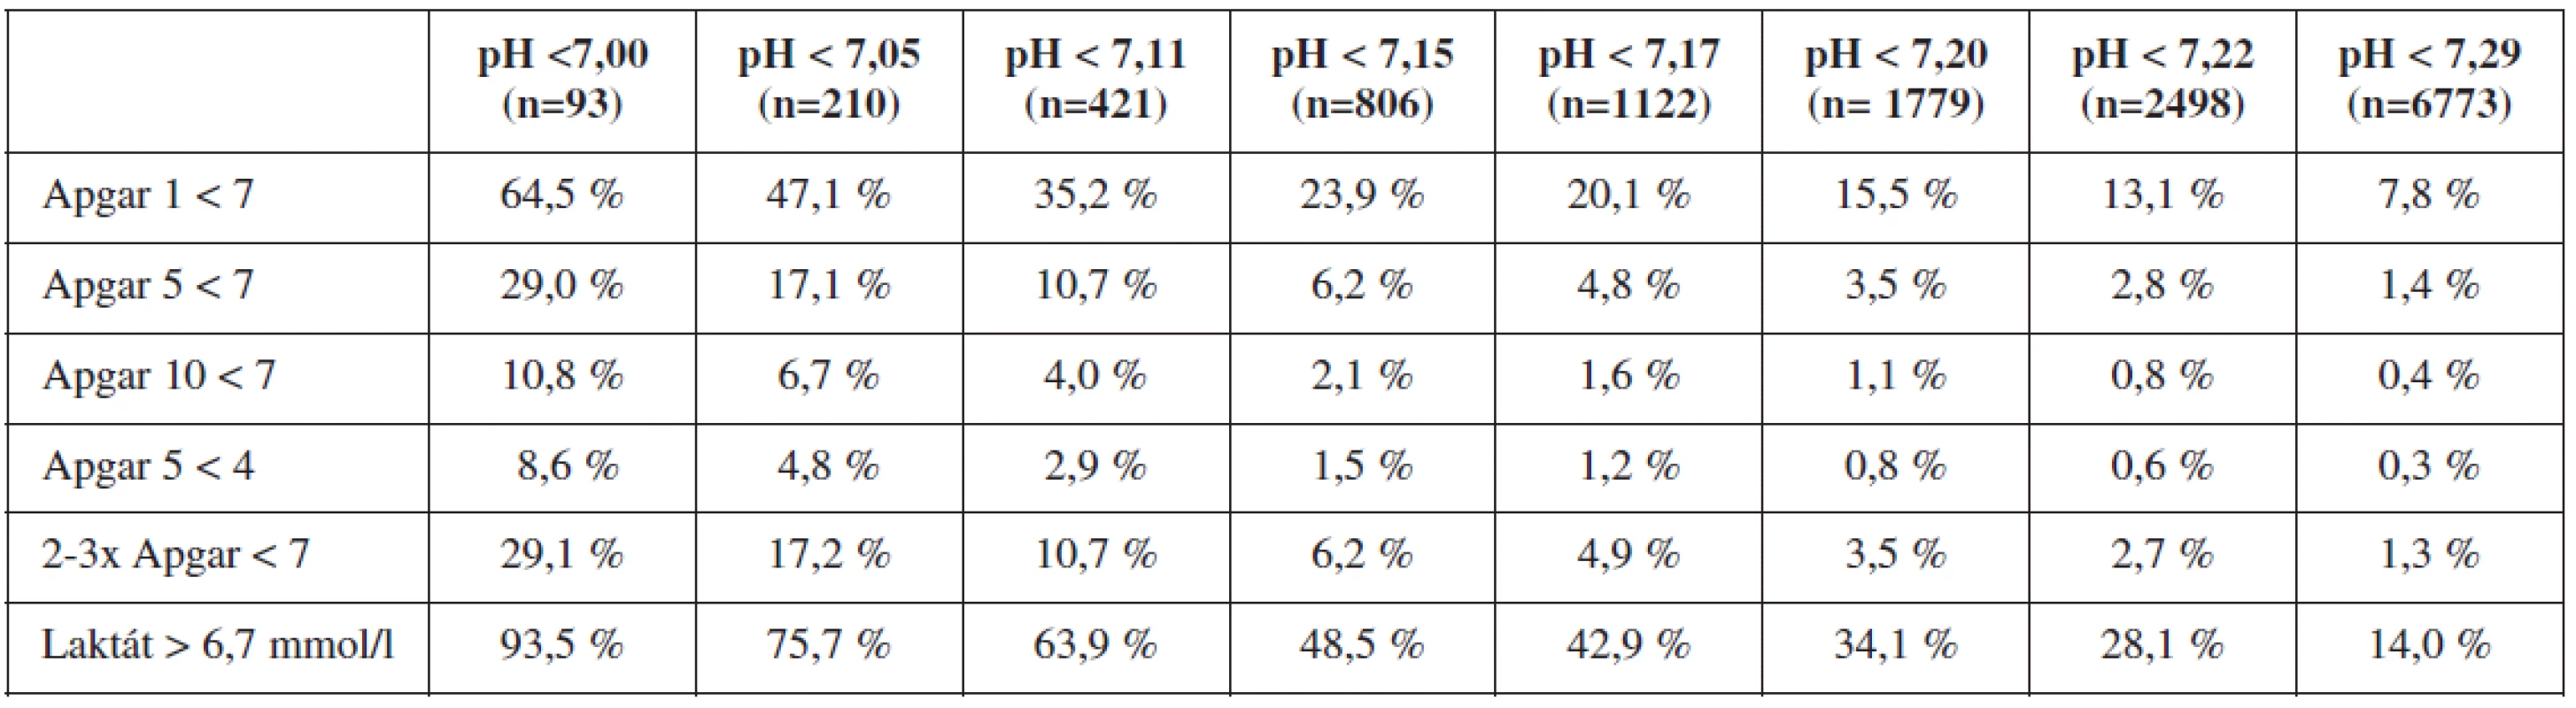 Frekvence patologických hodnot skóre Apgarové a laktátu &gt; 6,7 mmol u vybraných hodnot pH arteriální pupečníkové krve (n = 15 755)